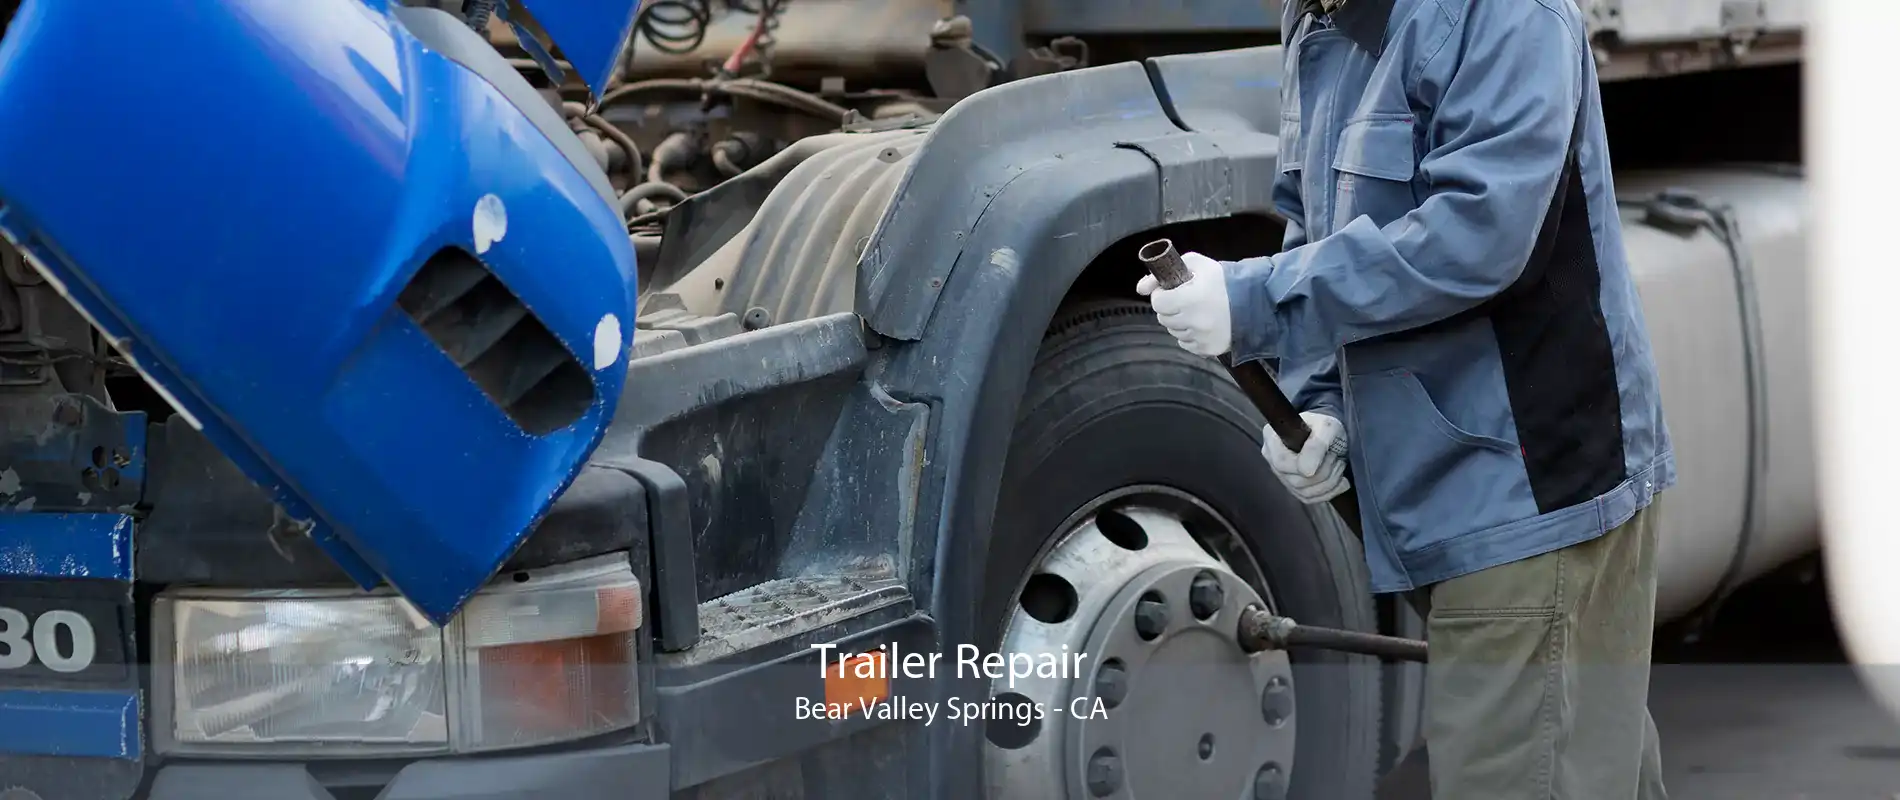 Trailer Repair Bear Valley Springs - CA